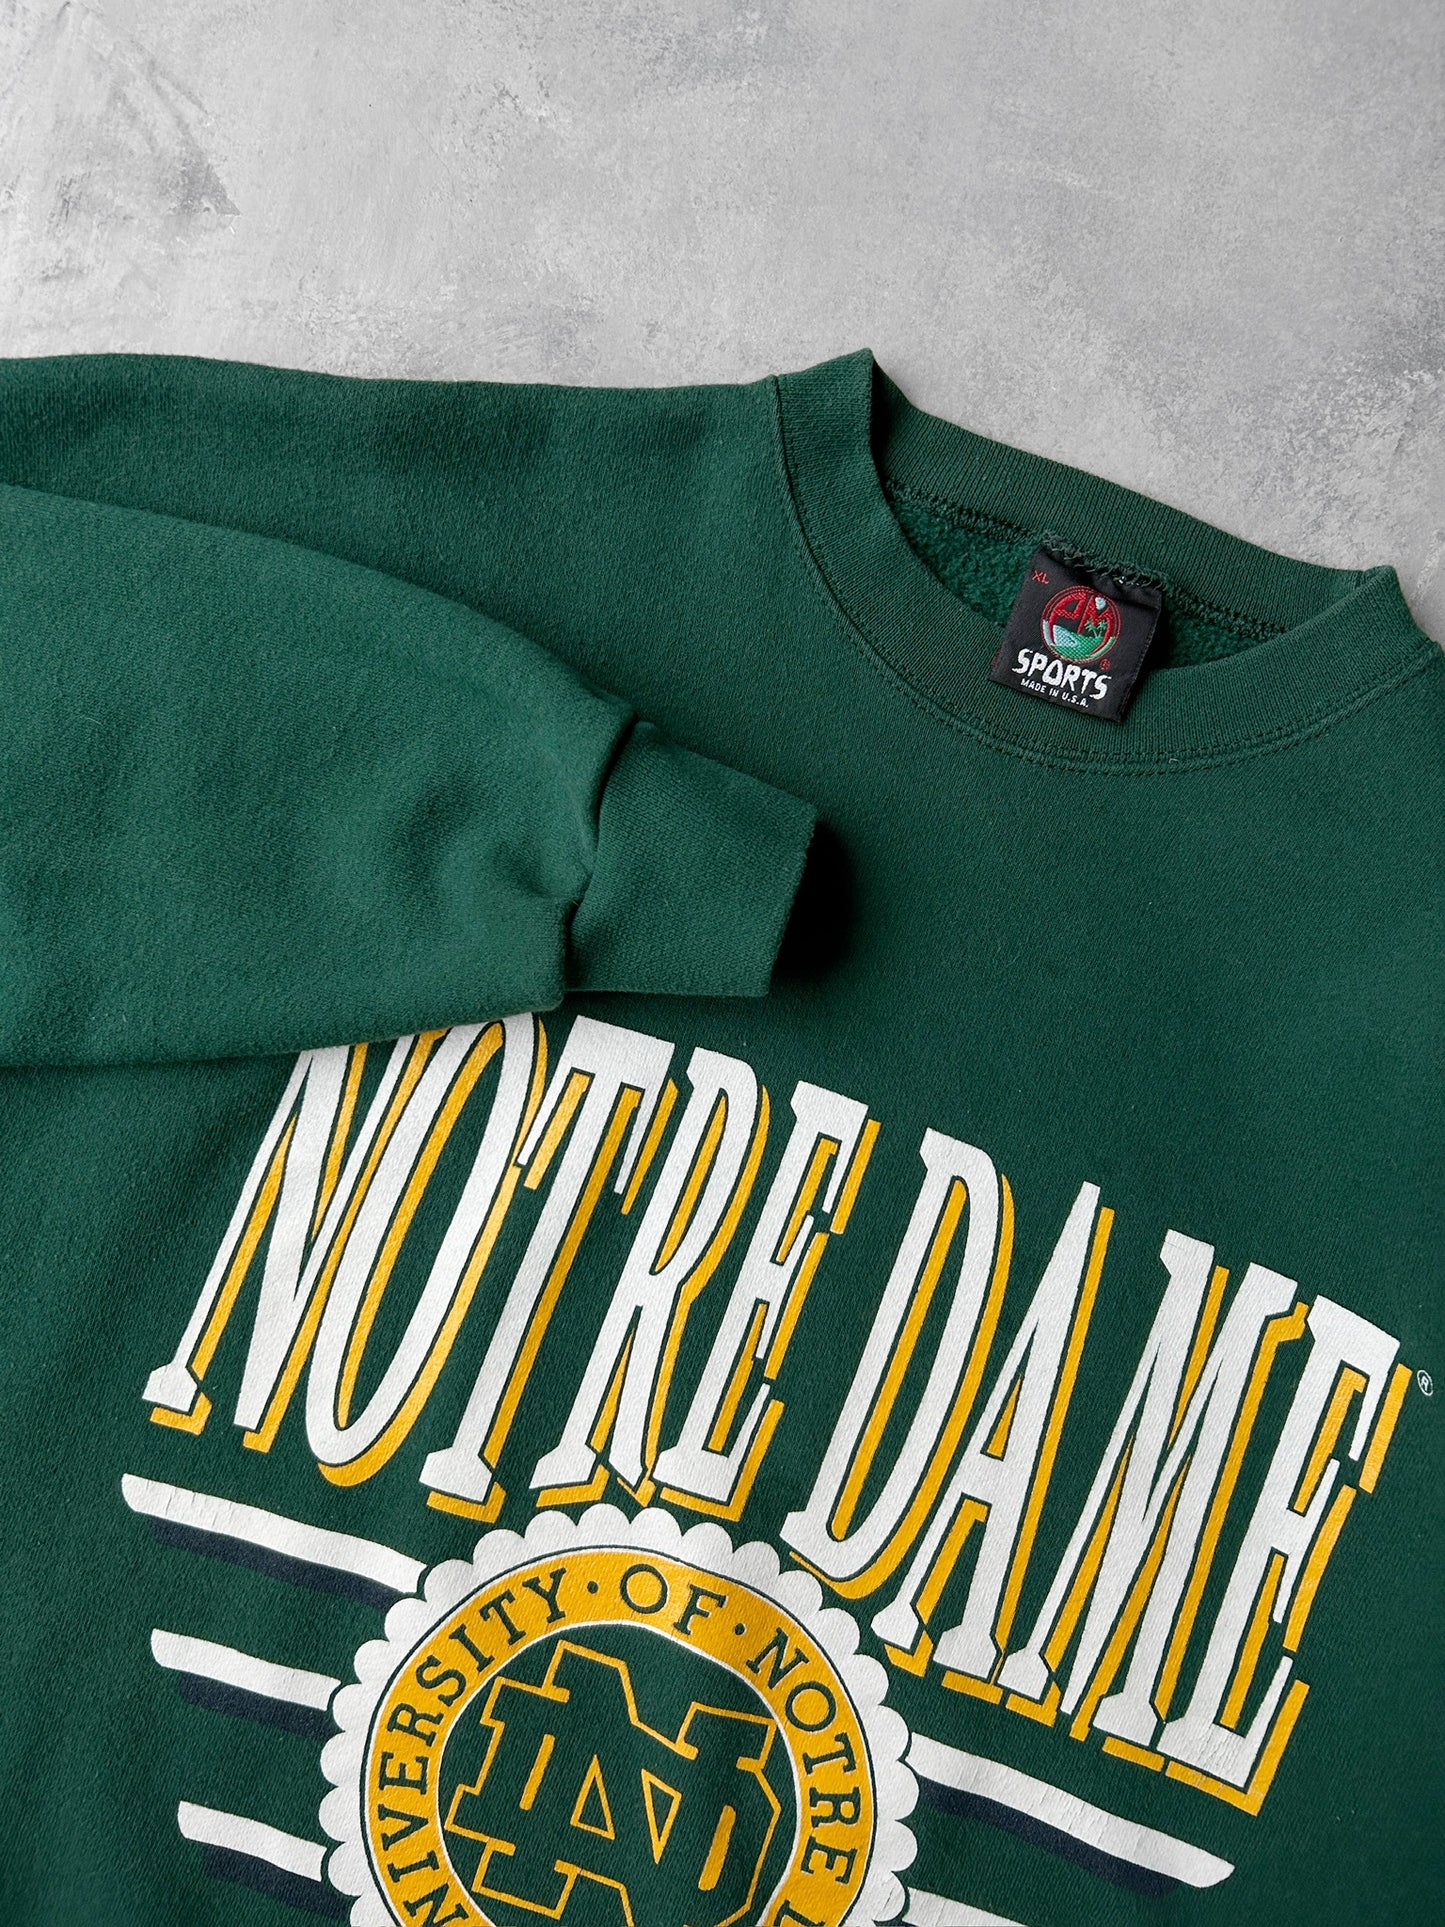 University of Notre Dame Sweatshirt 90's - XL